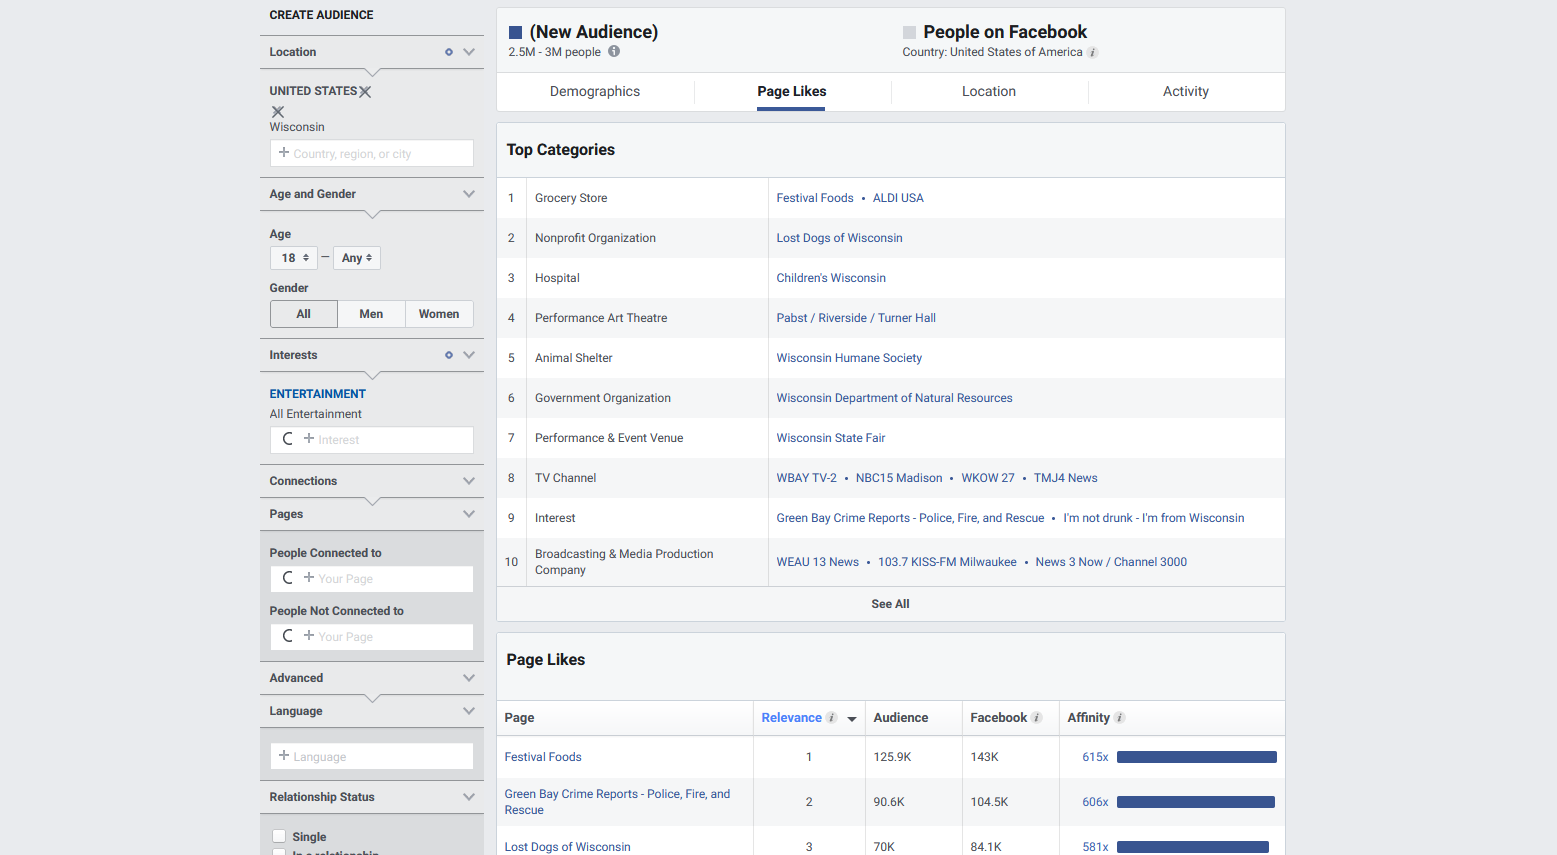 Native Facebook Analytics Tools
